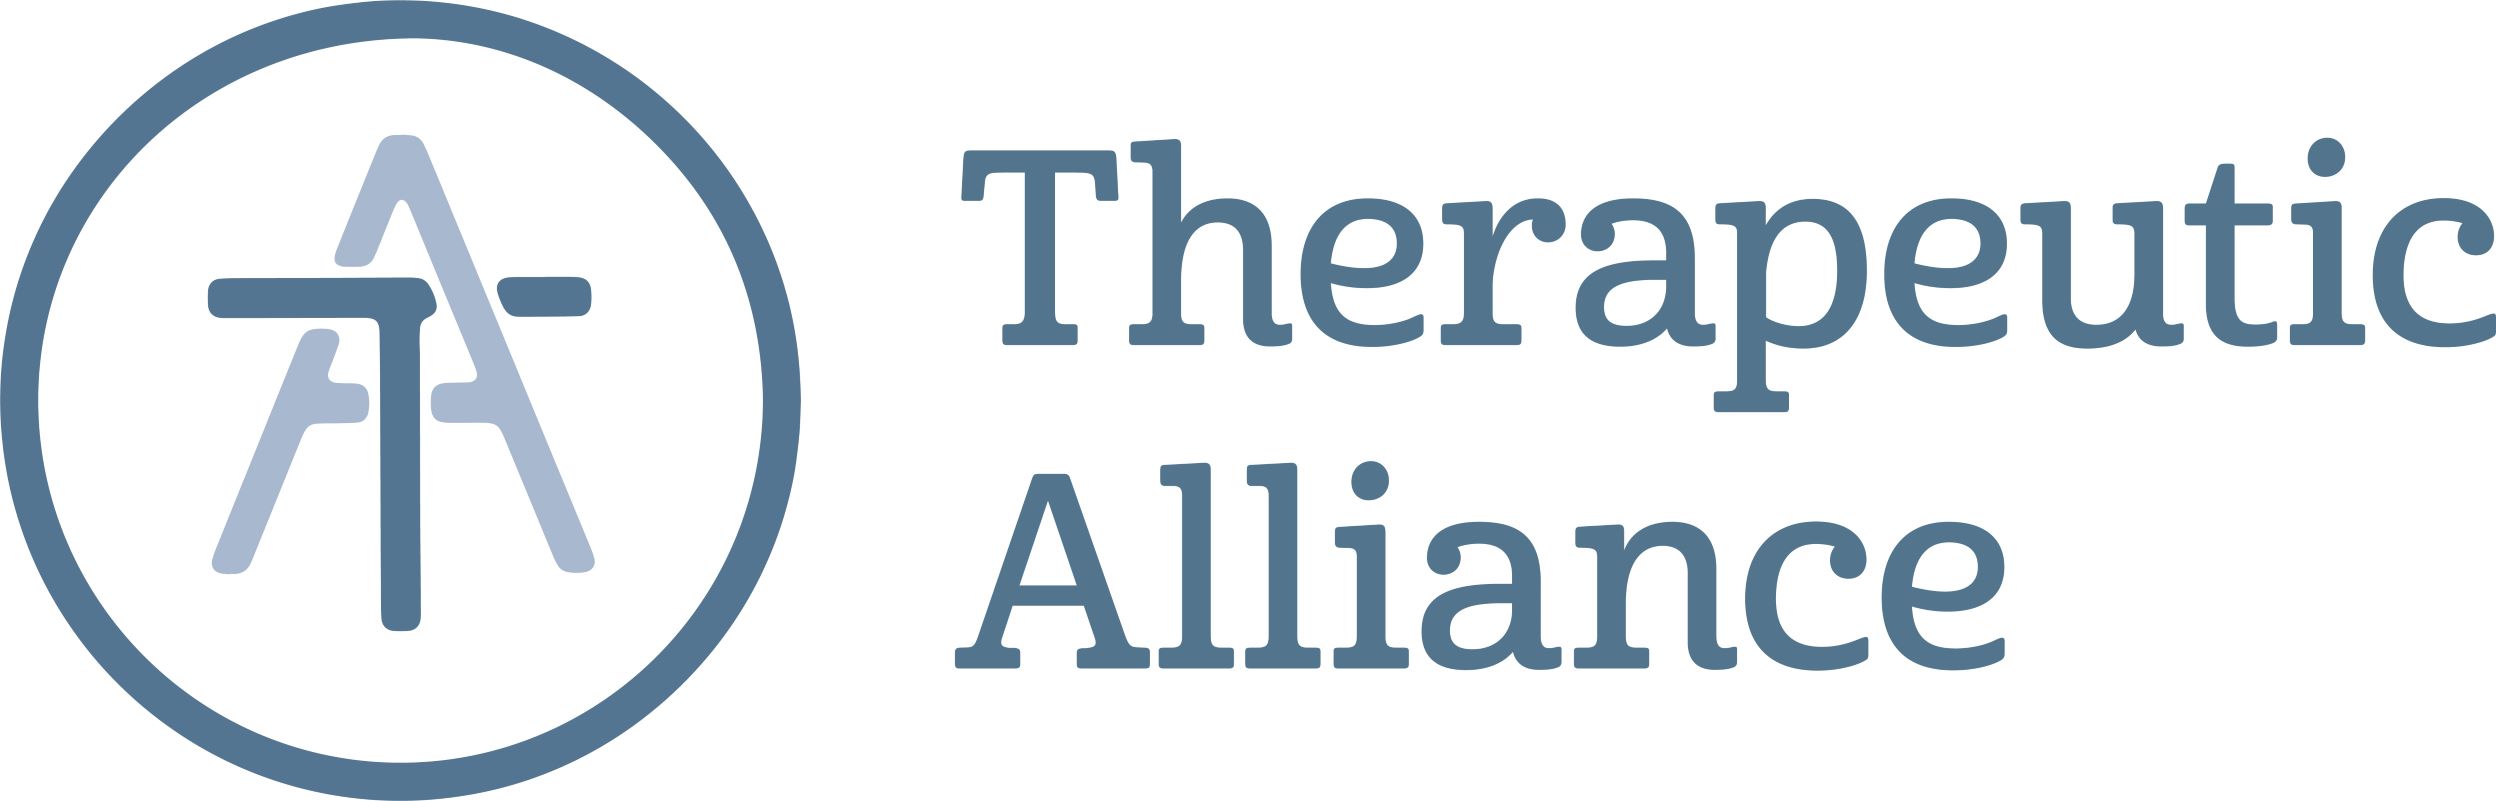 Therapeutic Alliance LLC